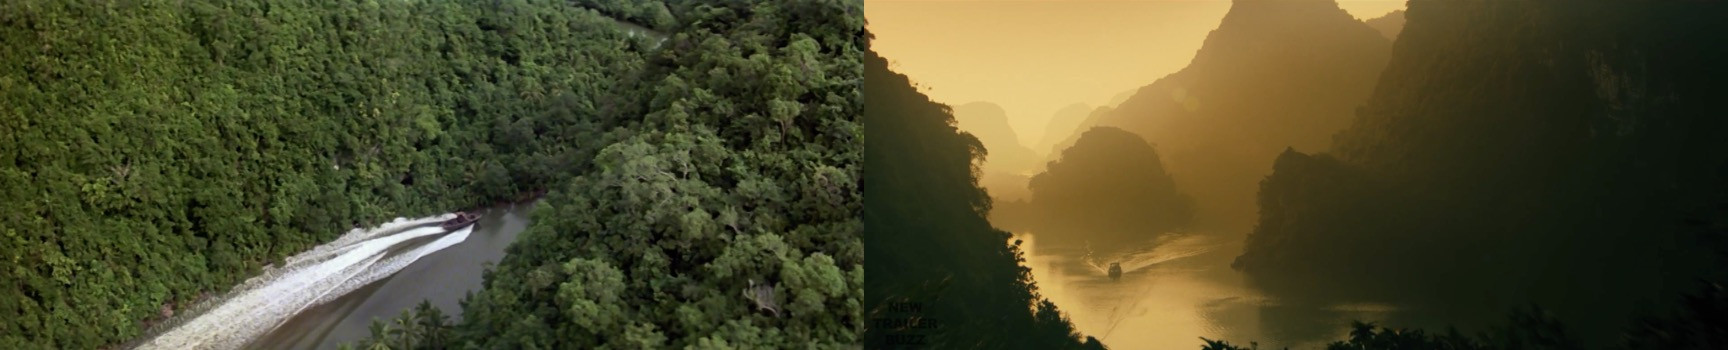 Слева «Апокалипсис сегодня», справа «Конг: Остров черепа»